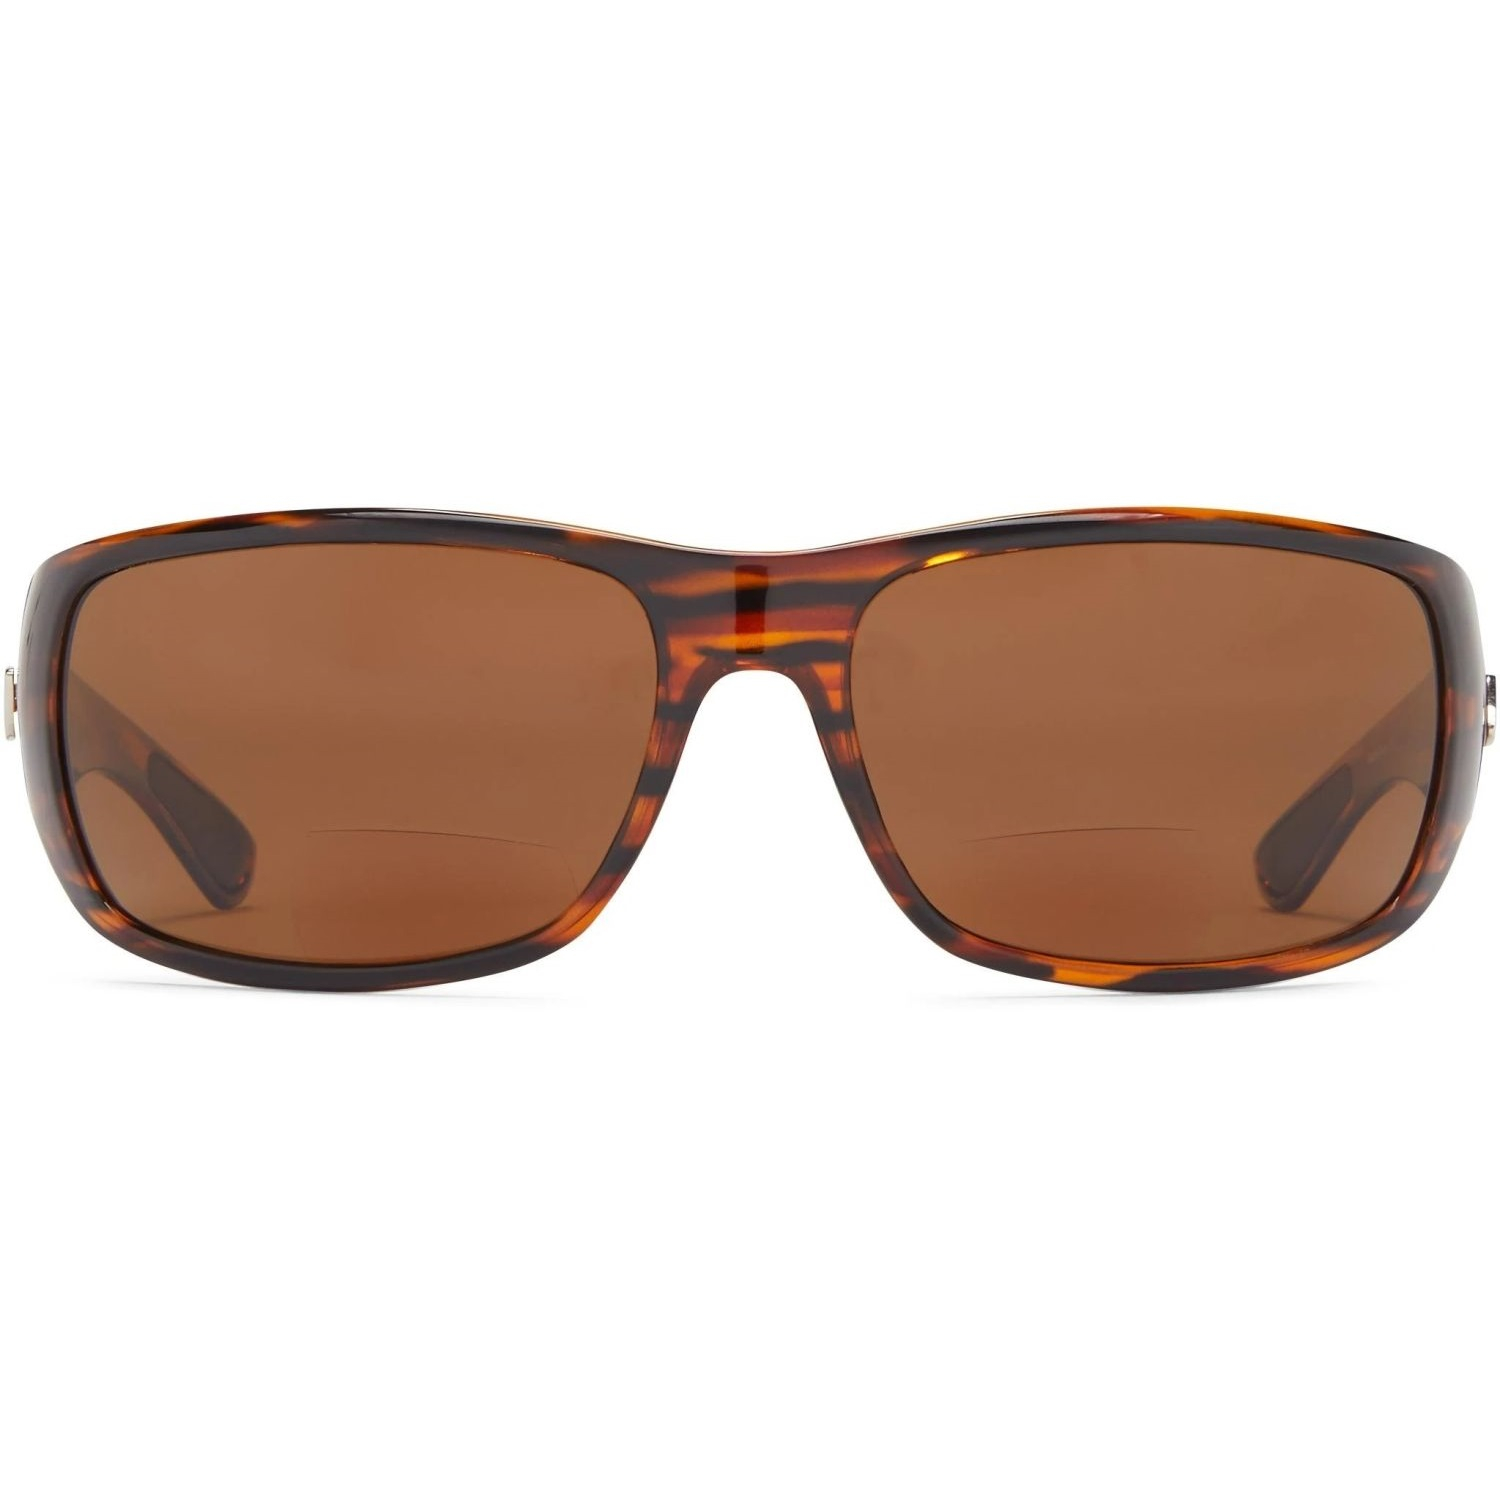 Wake Bifocal Polarized Glasses (+2.5) (brown)